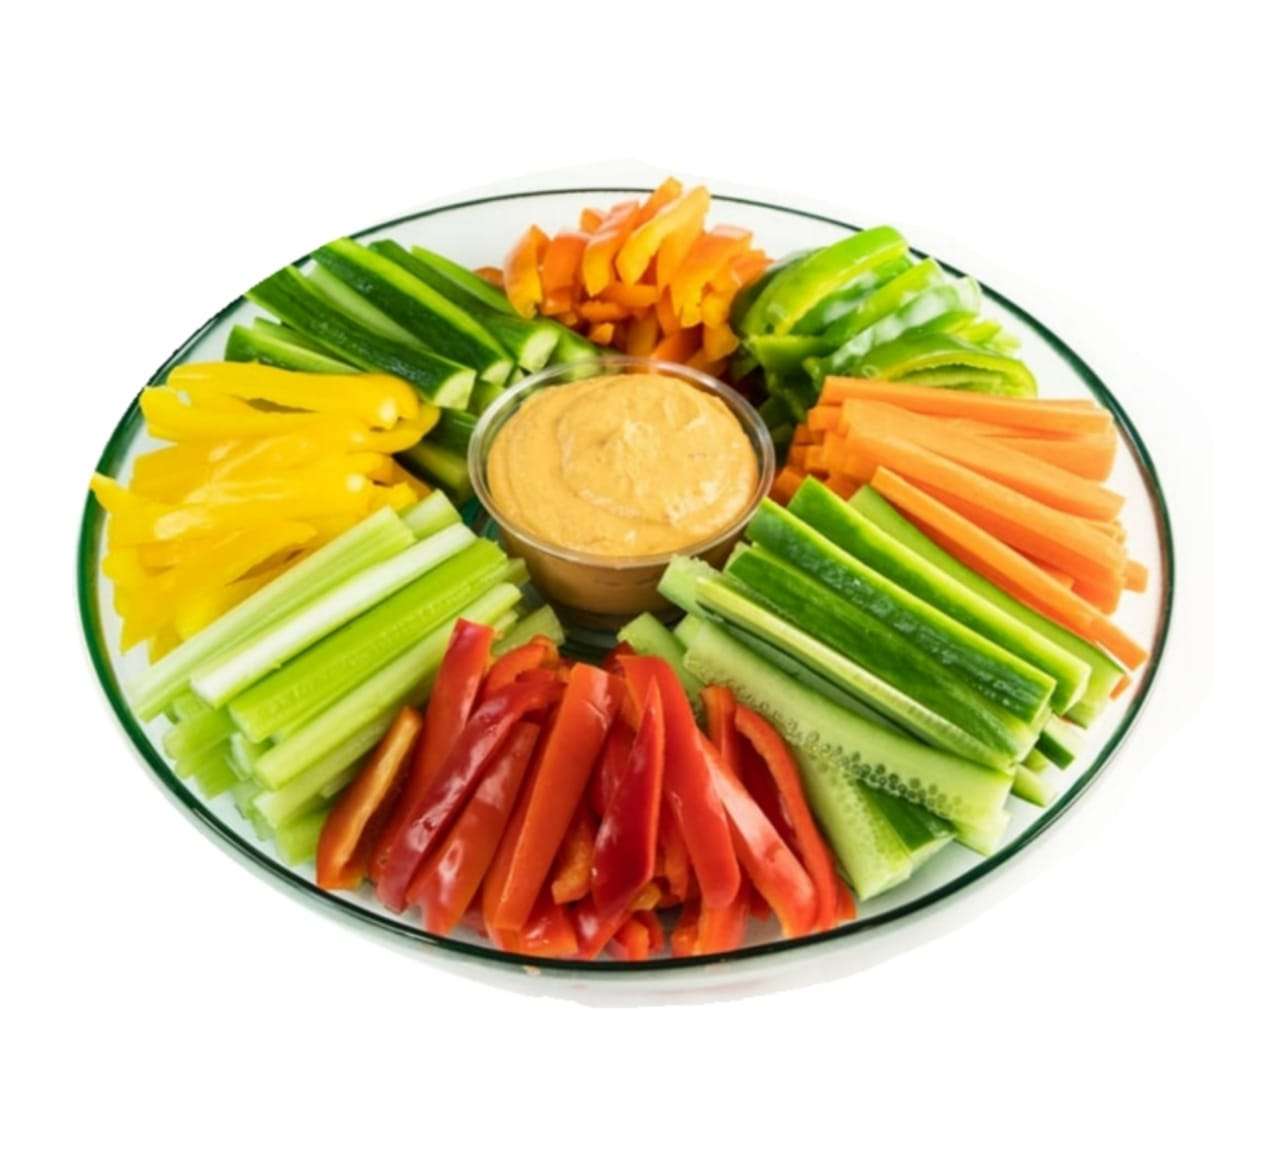 Vegetable & Hummus Platter